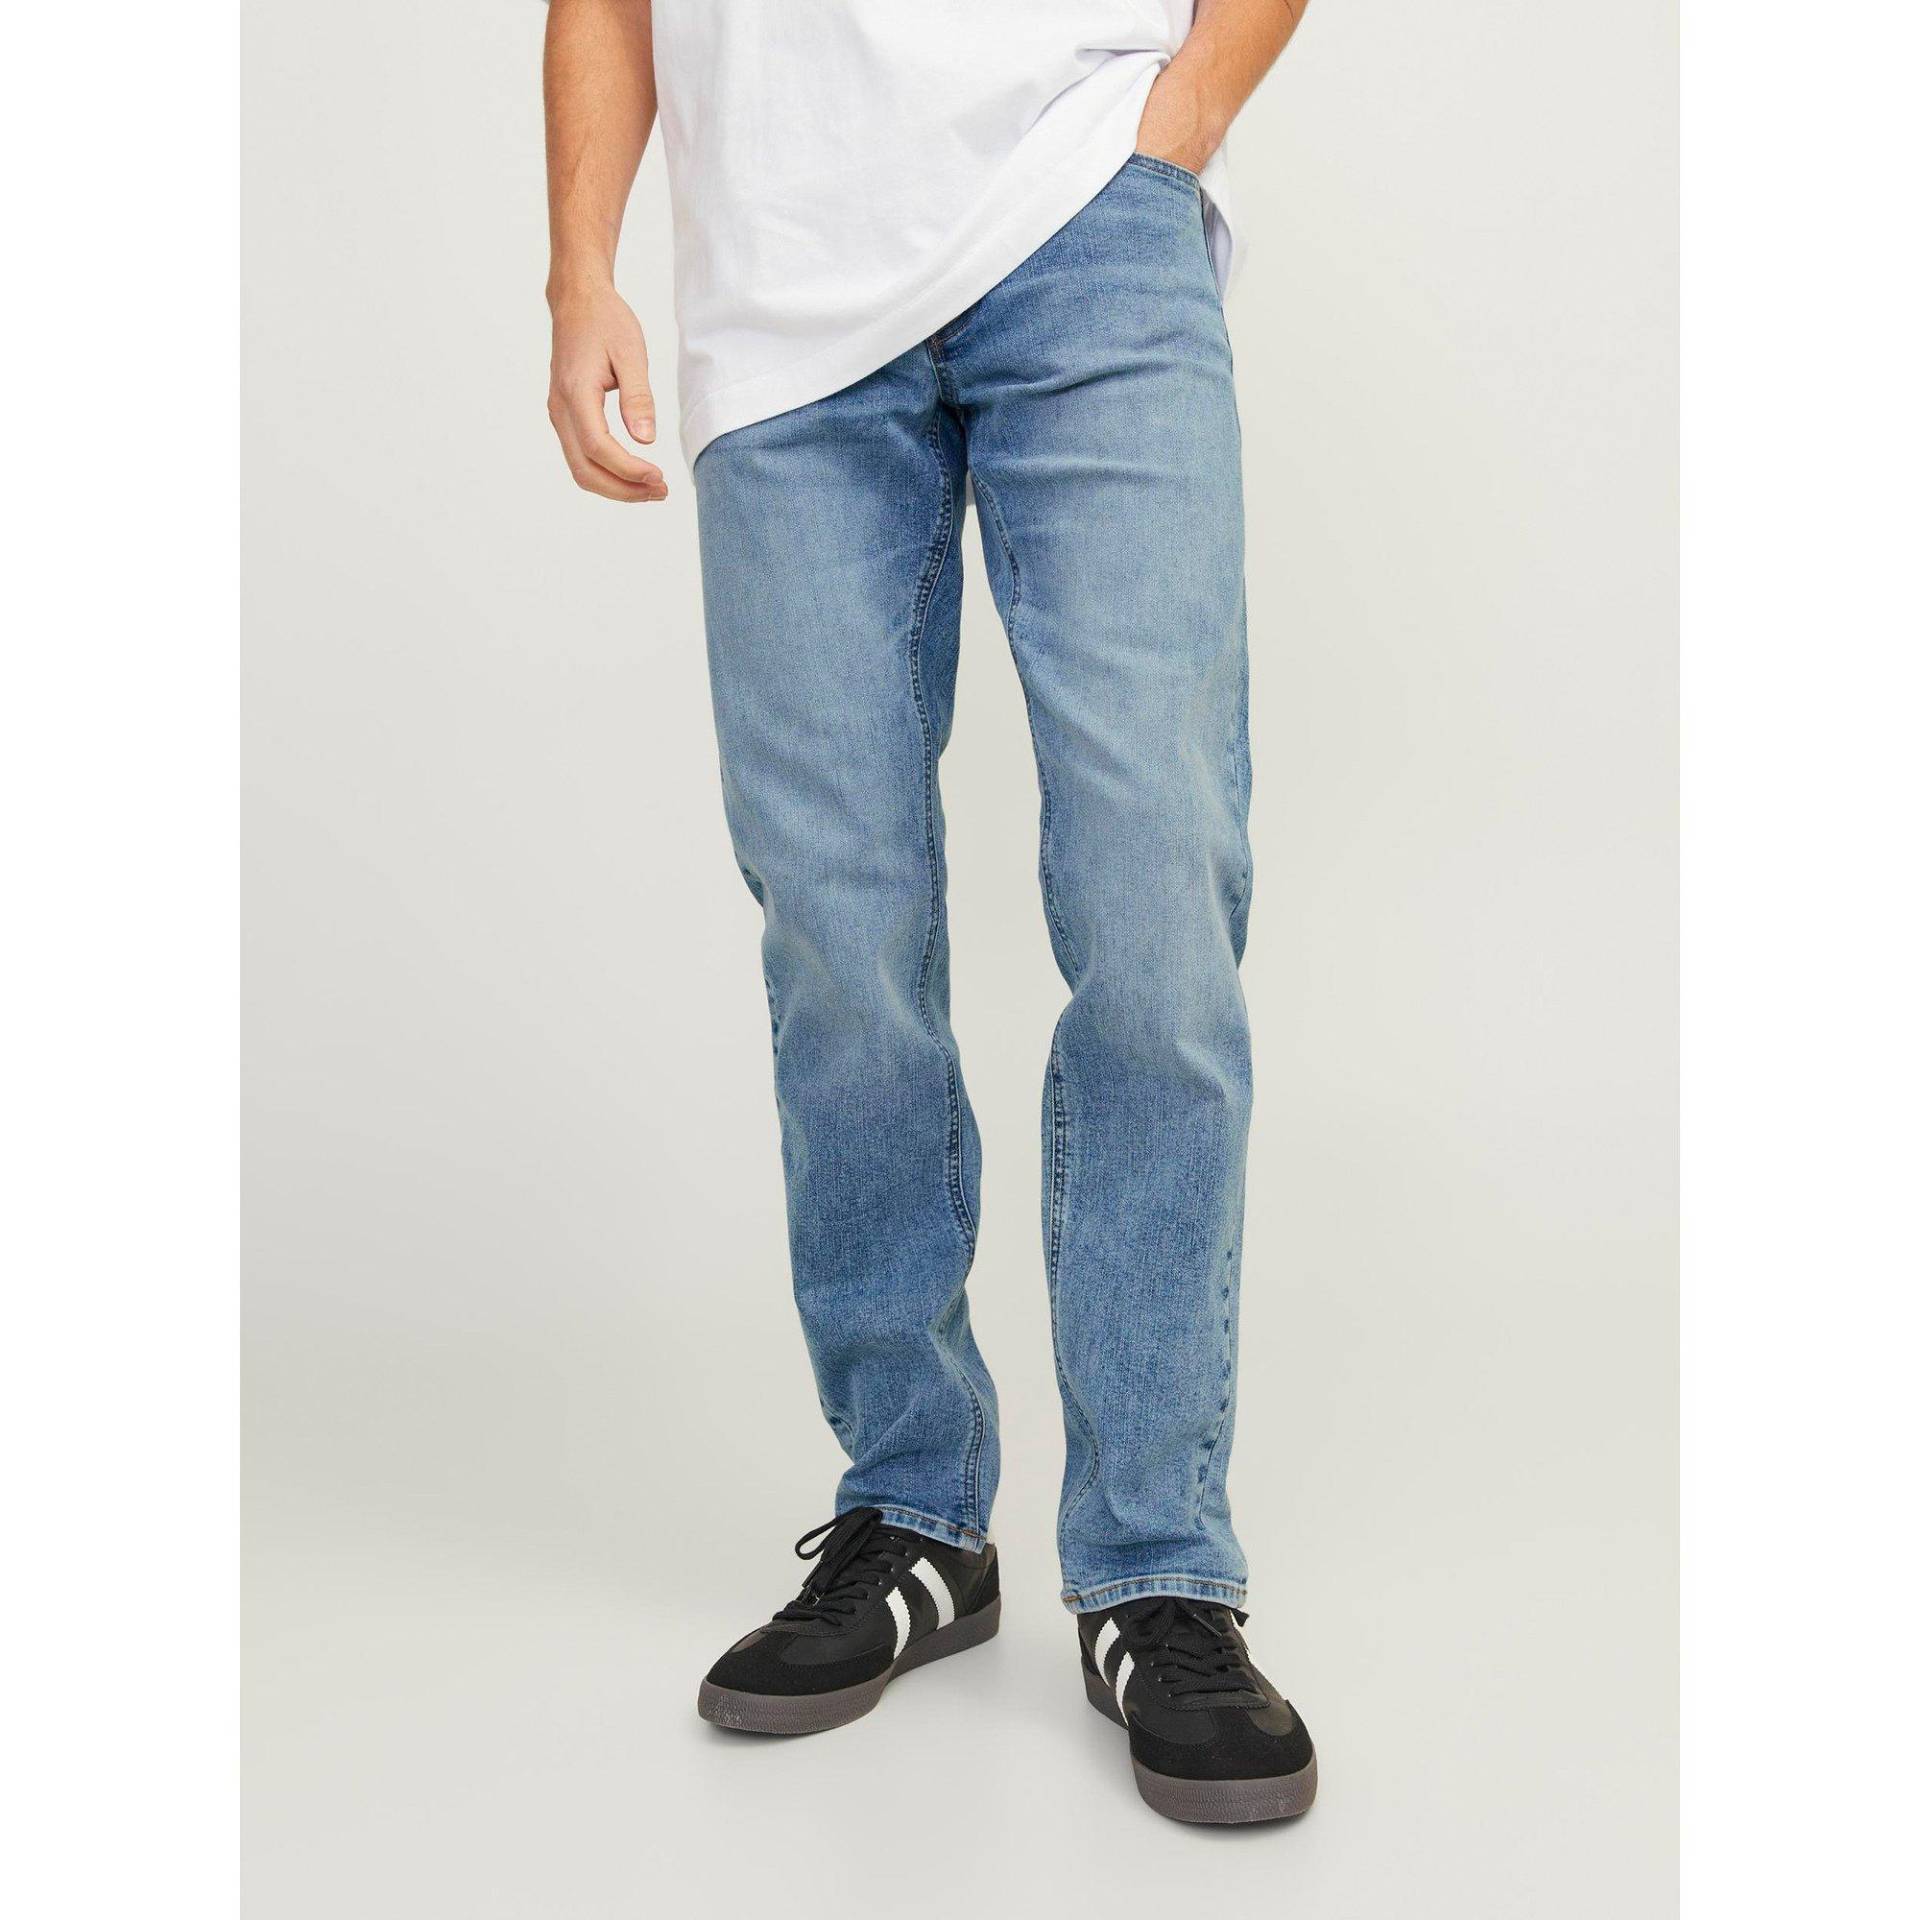 Jeans, Slim Fit Herren Blau Denim L32/W31 von JACK & JONES